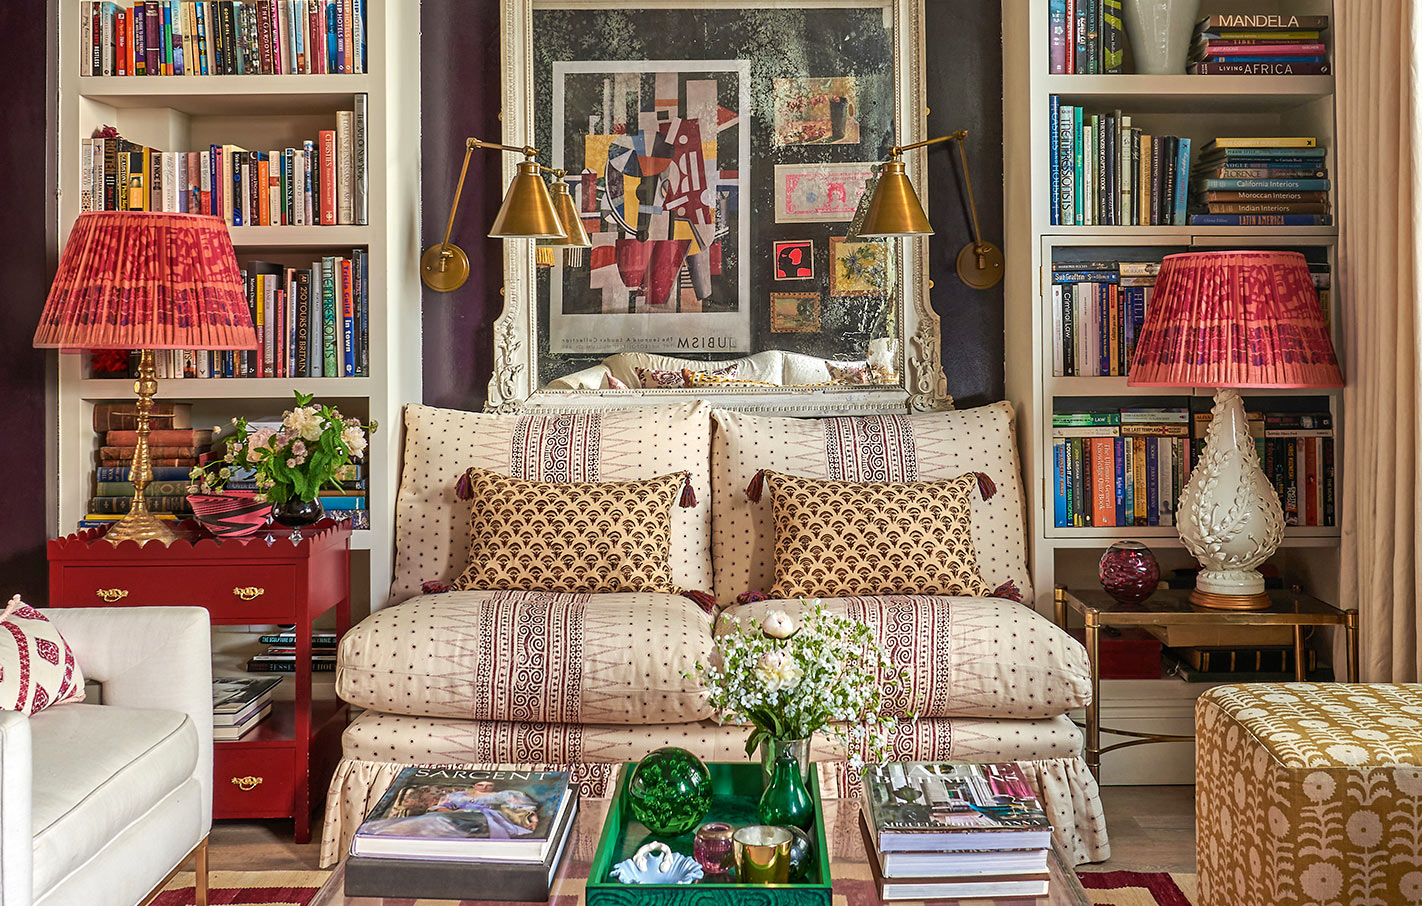 Interior designer Sarah Vanrenen shows us around her pattern-rich, colourful Notting Hill home